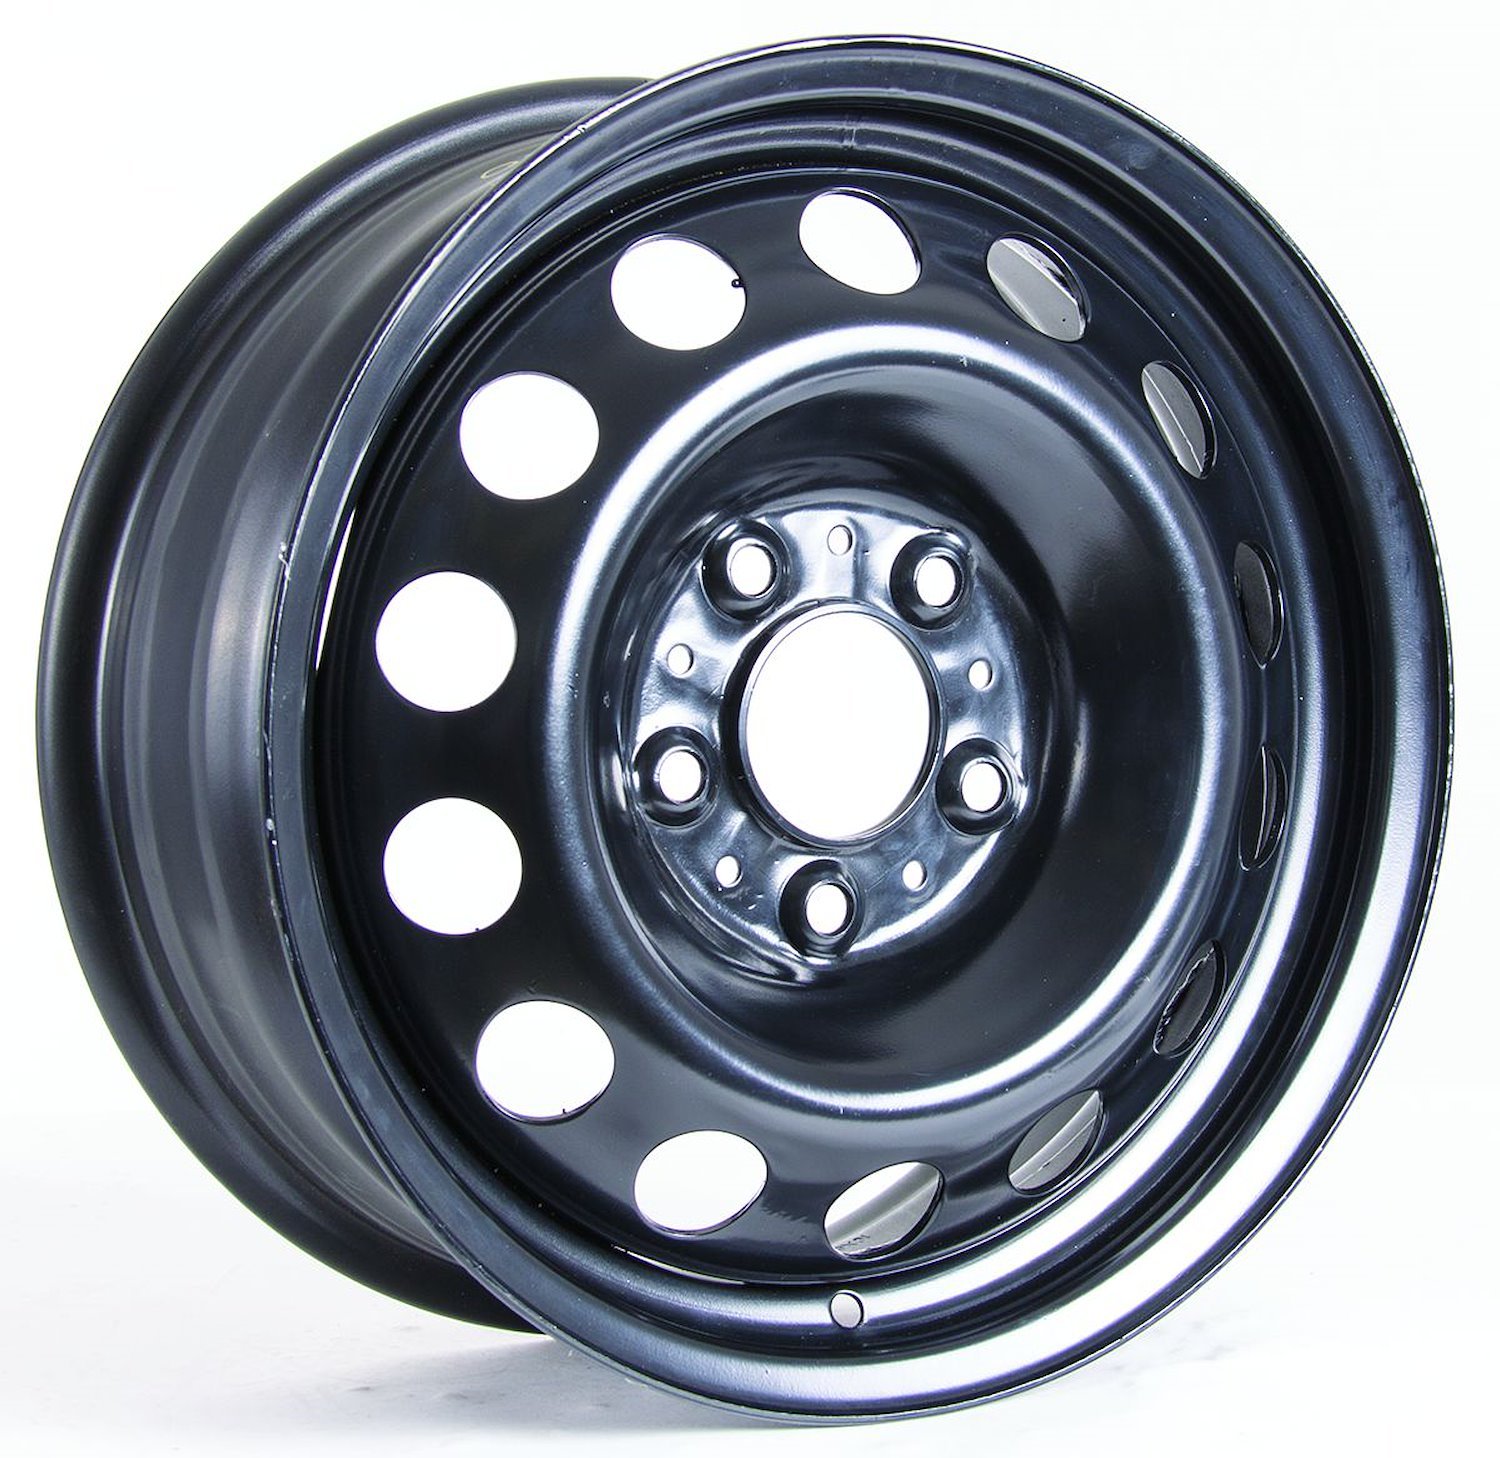 X46520 Steel Wheel [Size: 16" x 6.50"] Black Finish